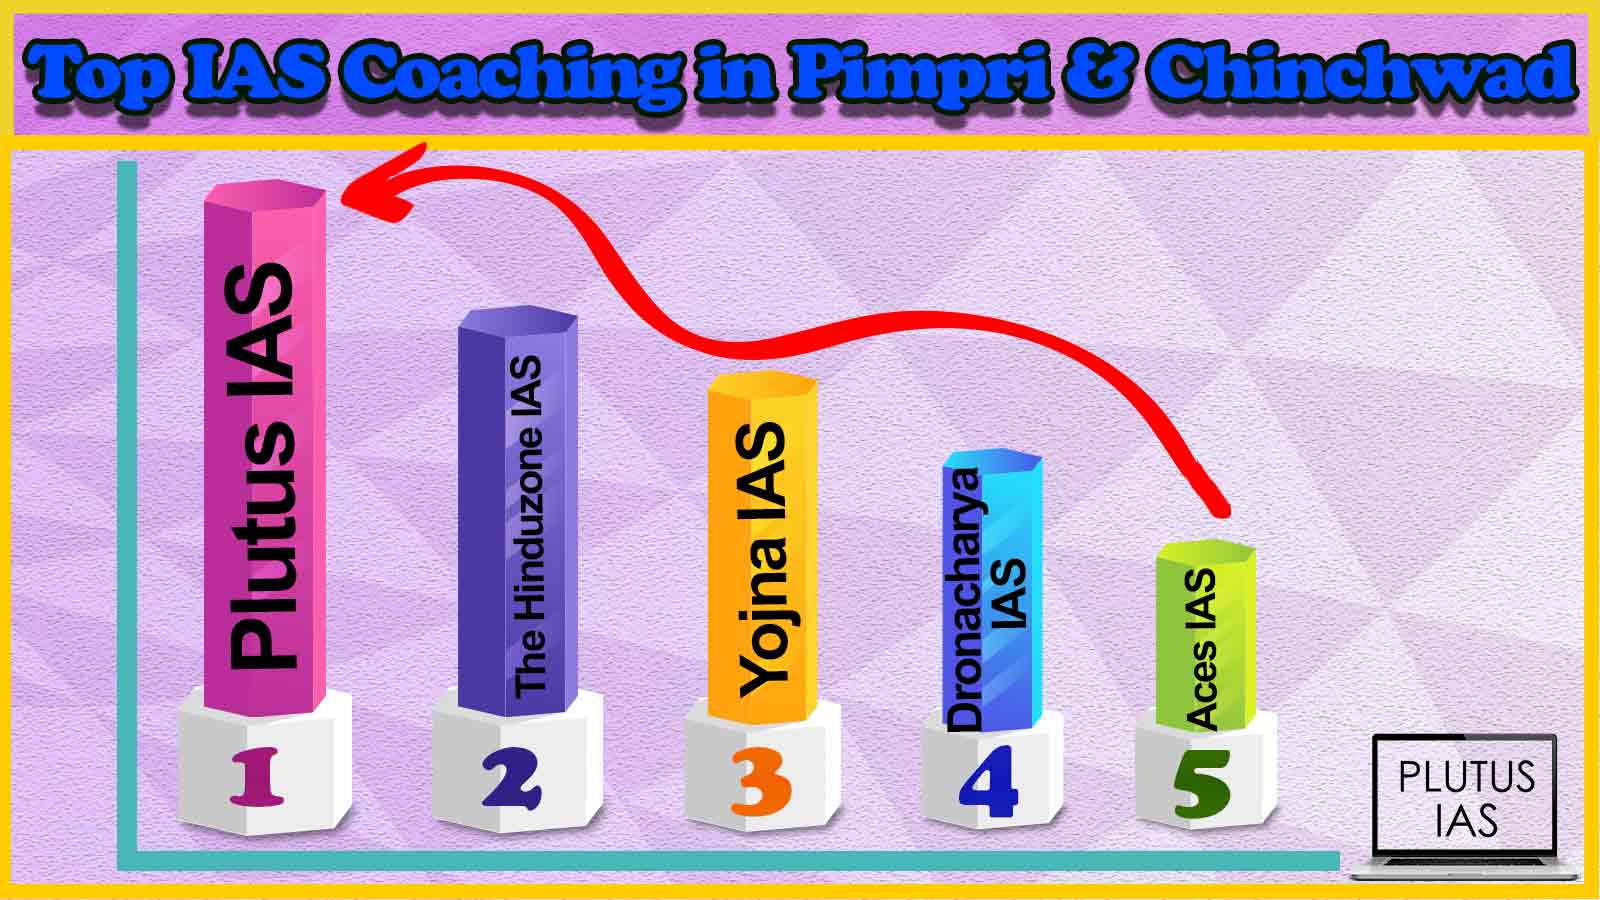 Best IAS Coaching in Pimpri Chinchwad